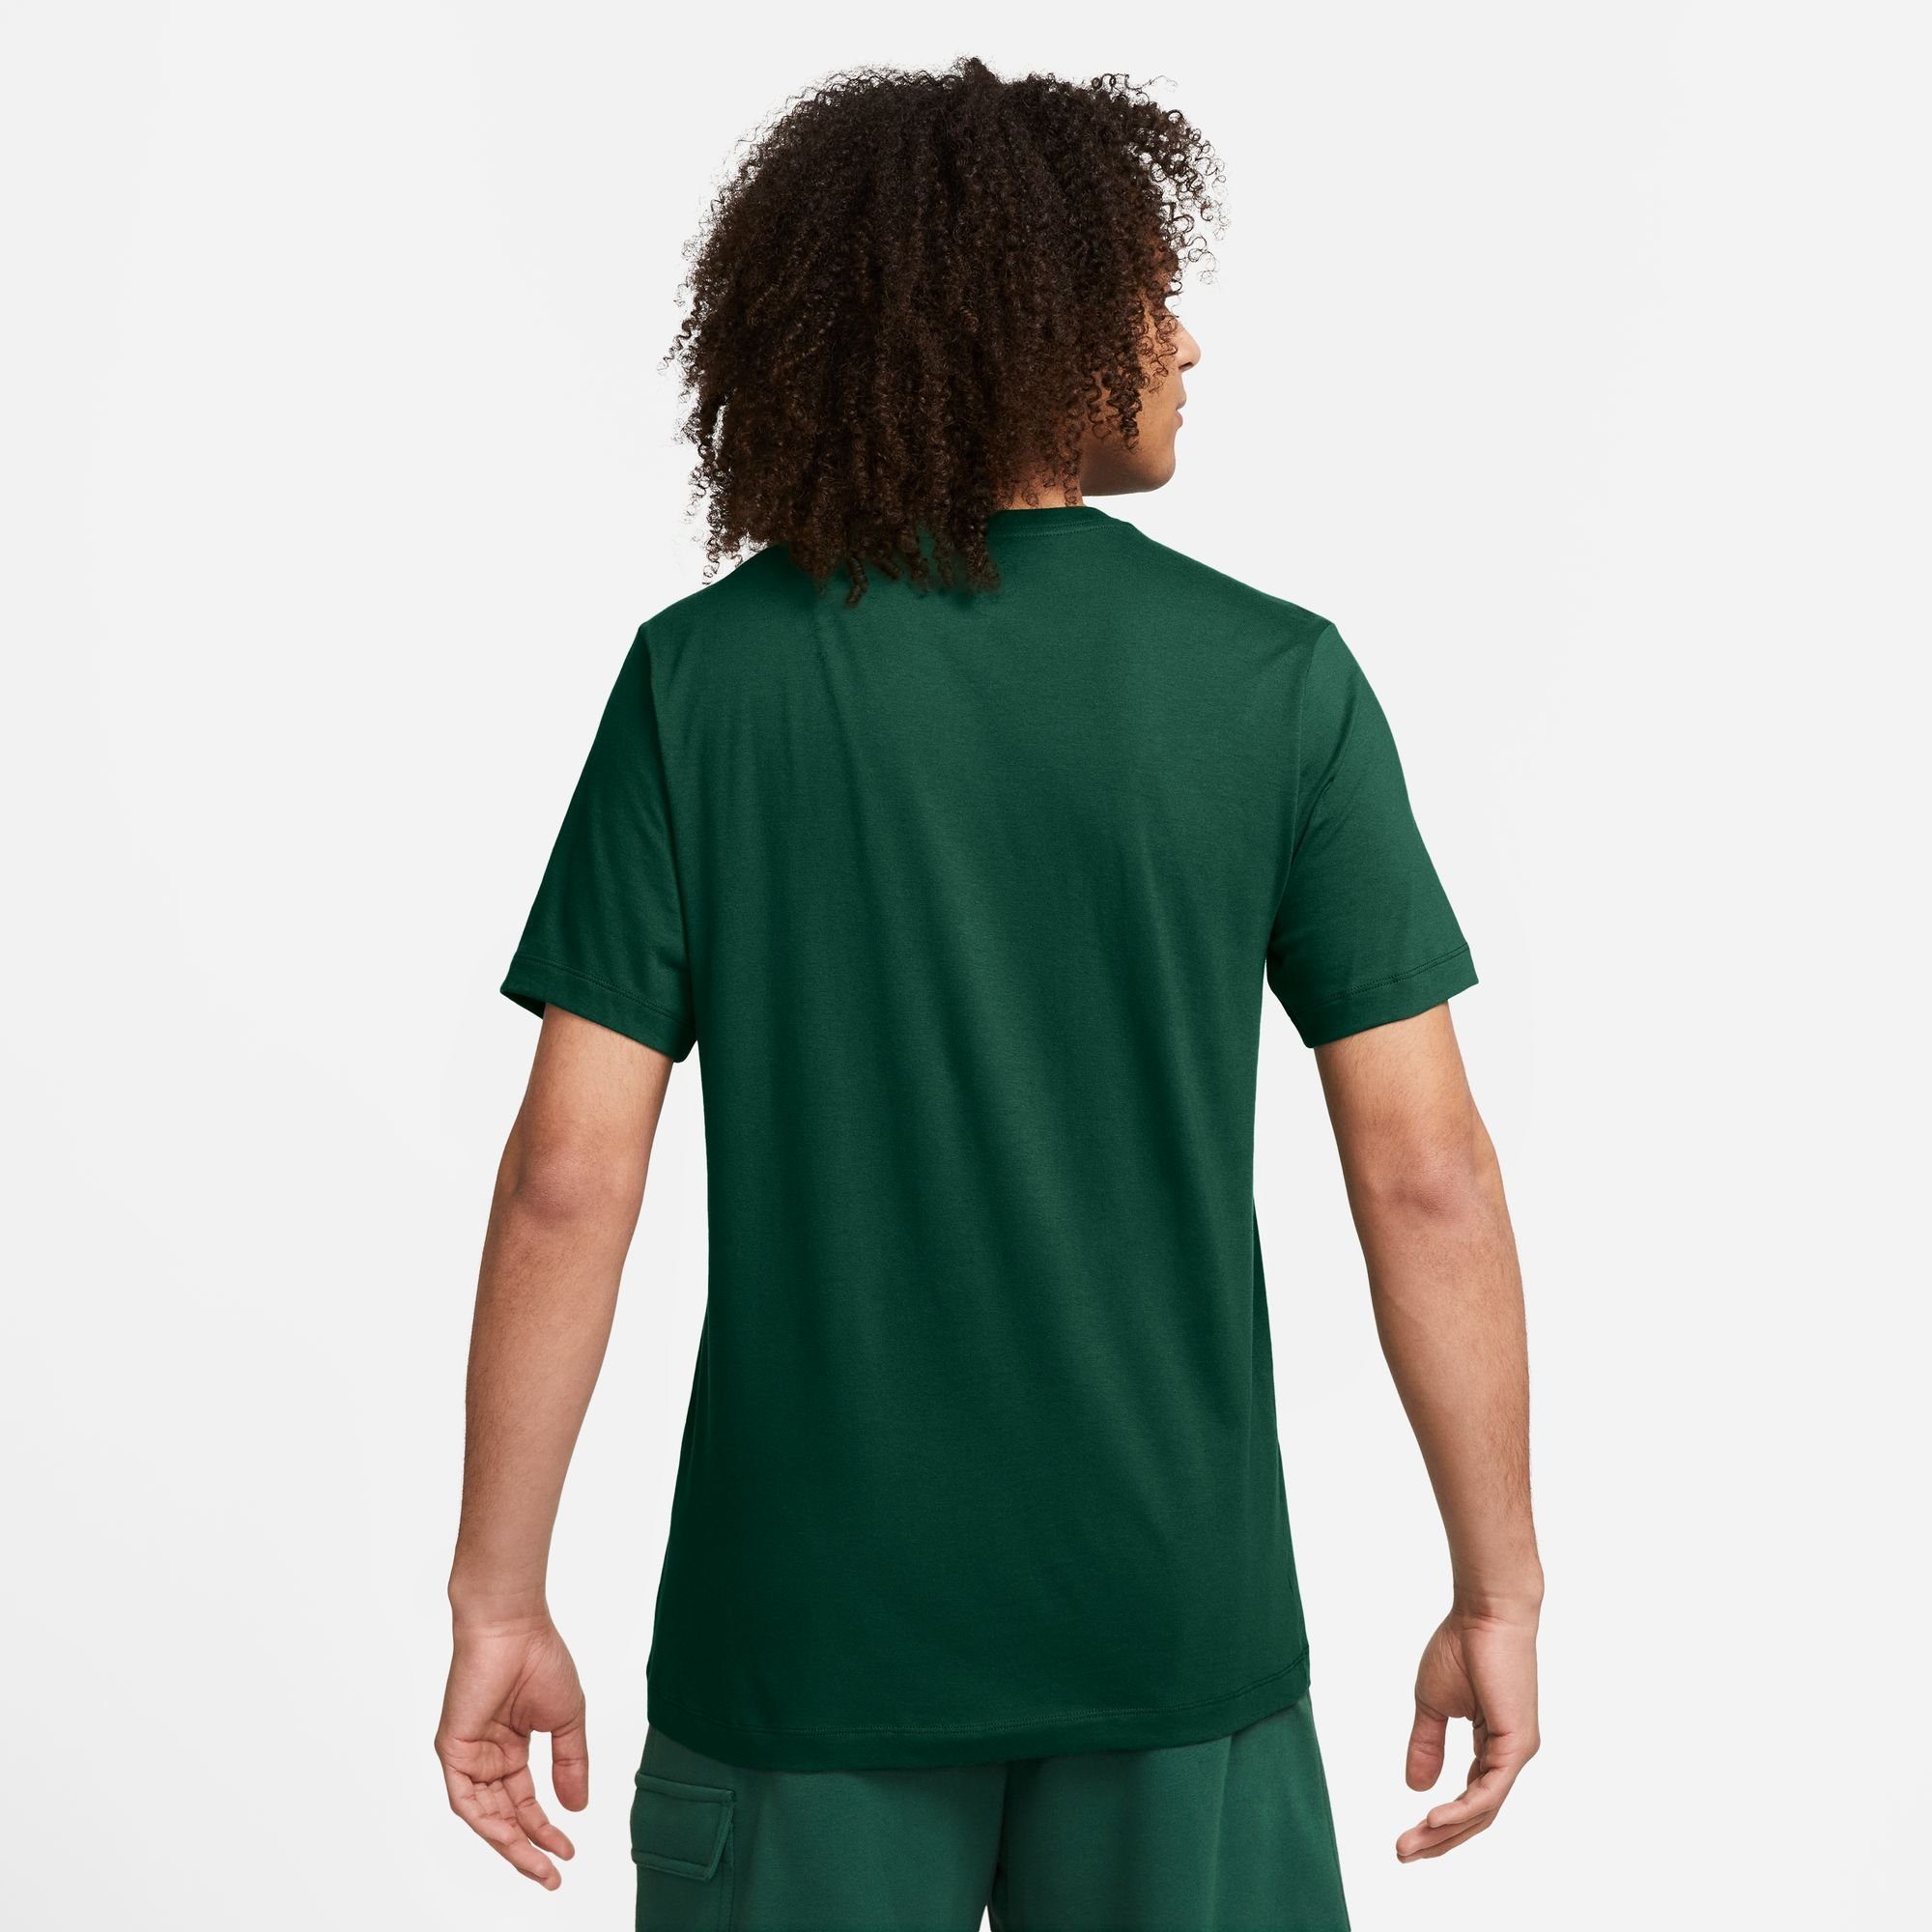 FIR T-SHIRT Nike T-Shirt CLUB MEN'S Sportswear